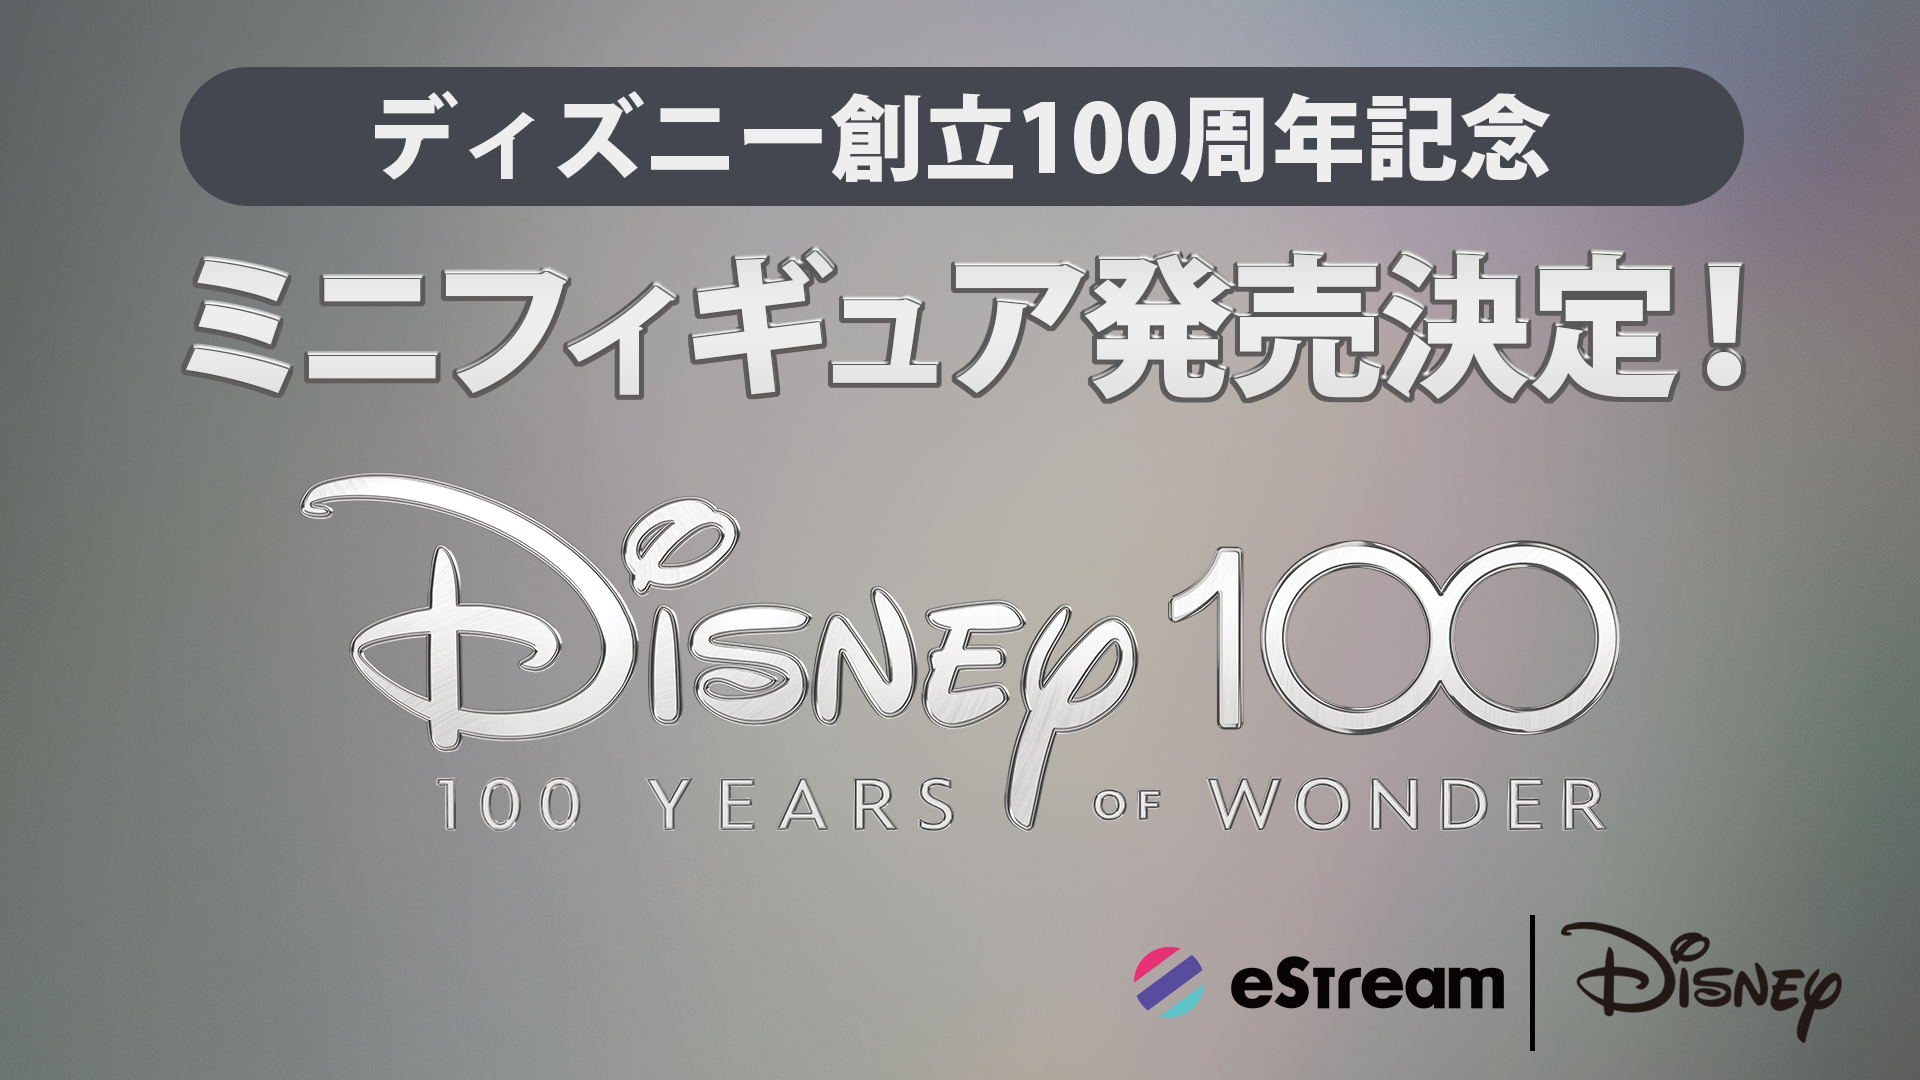 eStream、ウォルト・ディズニー・ジャパン株式会社と商品ライセンス